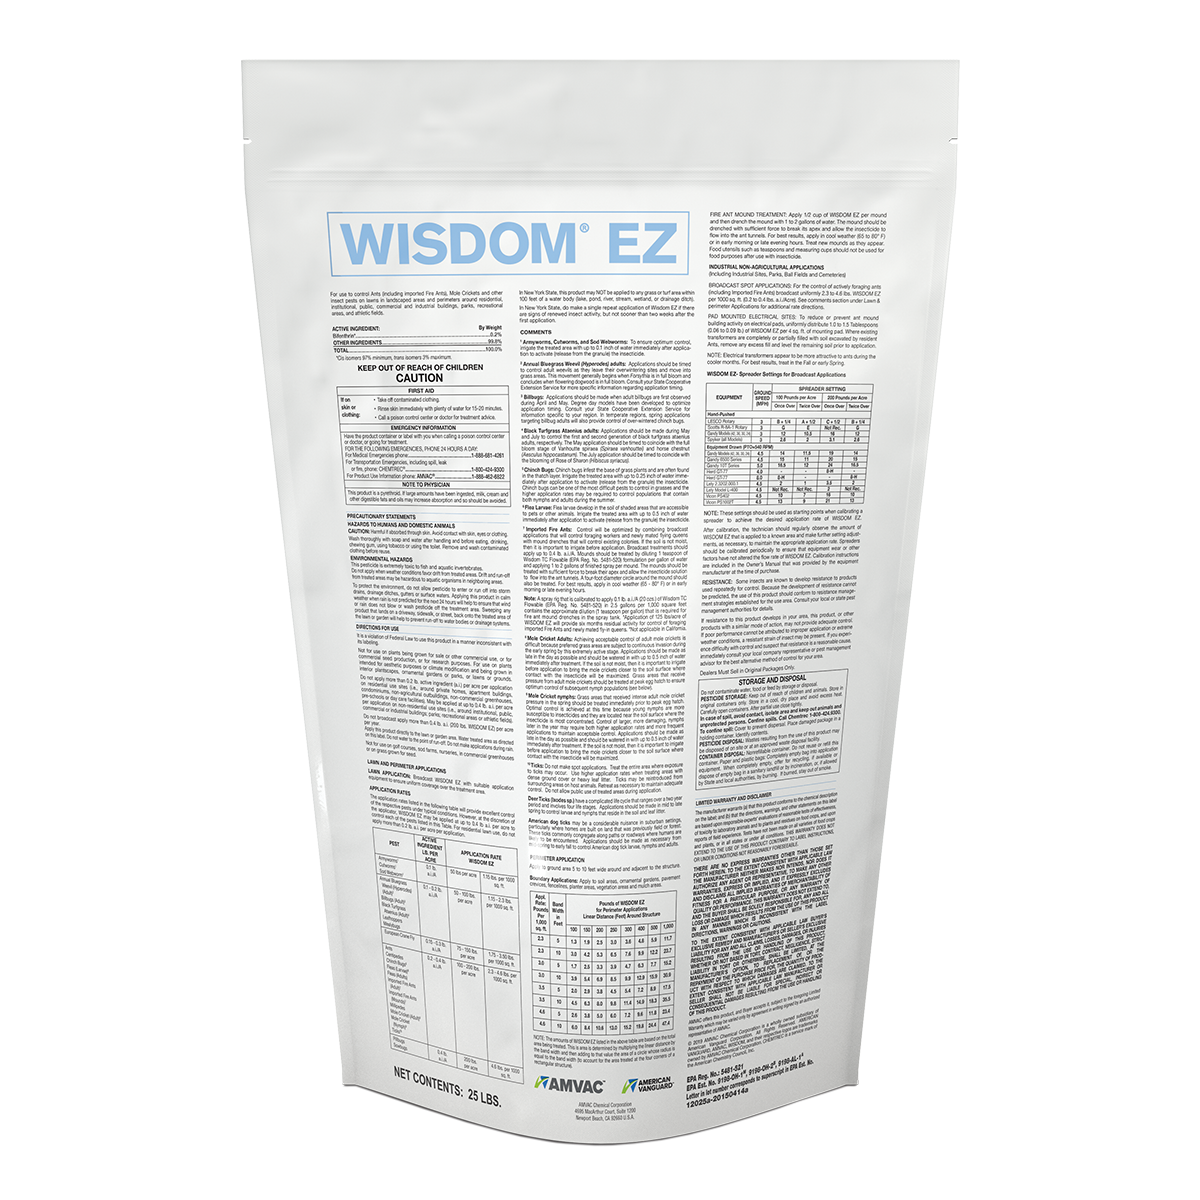 WISDOM EZ product package